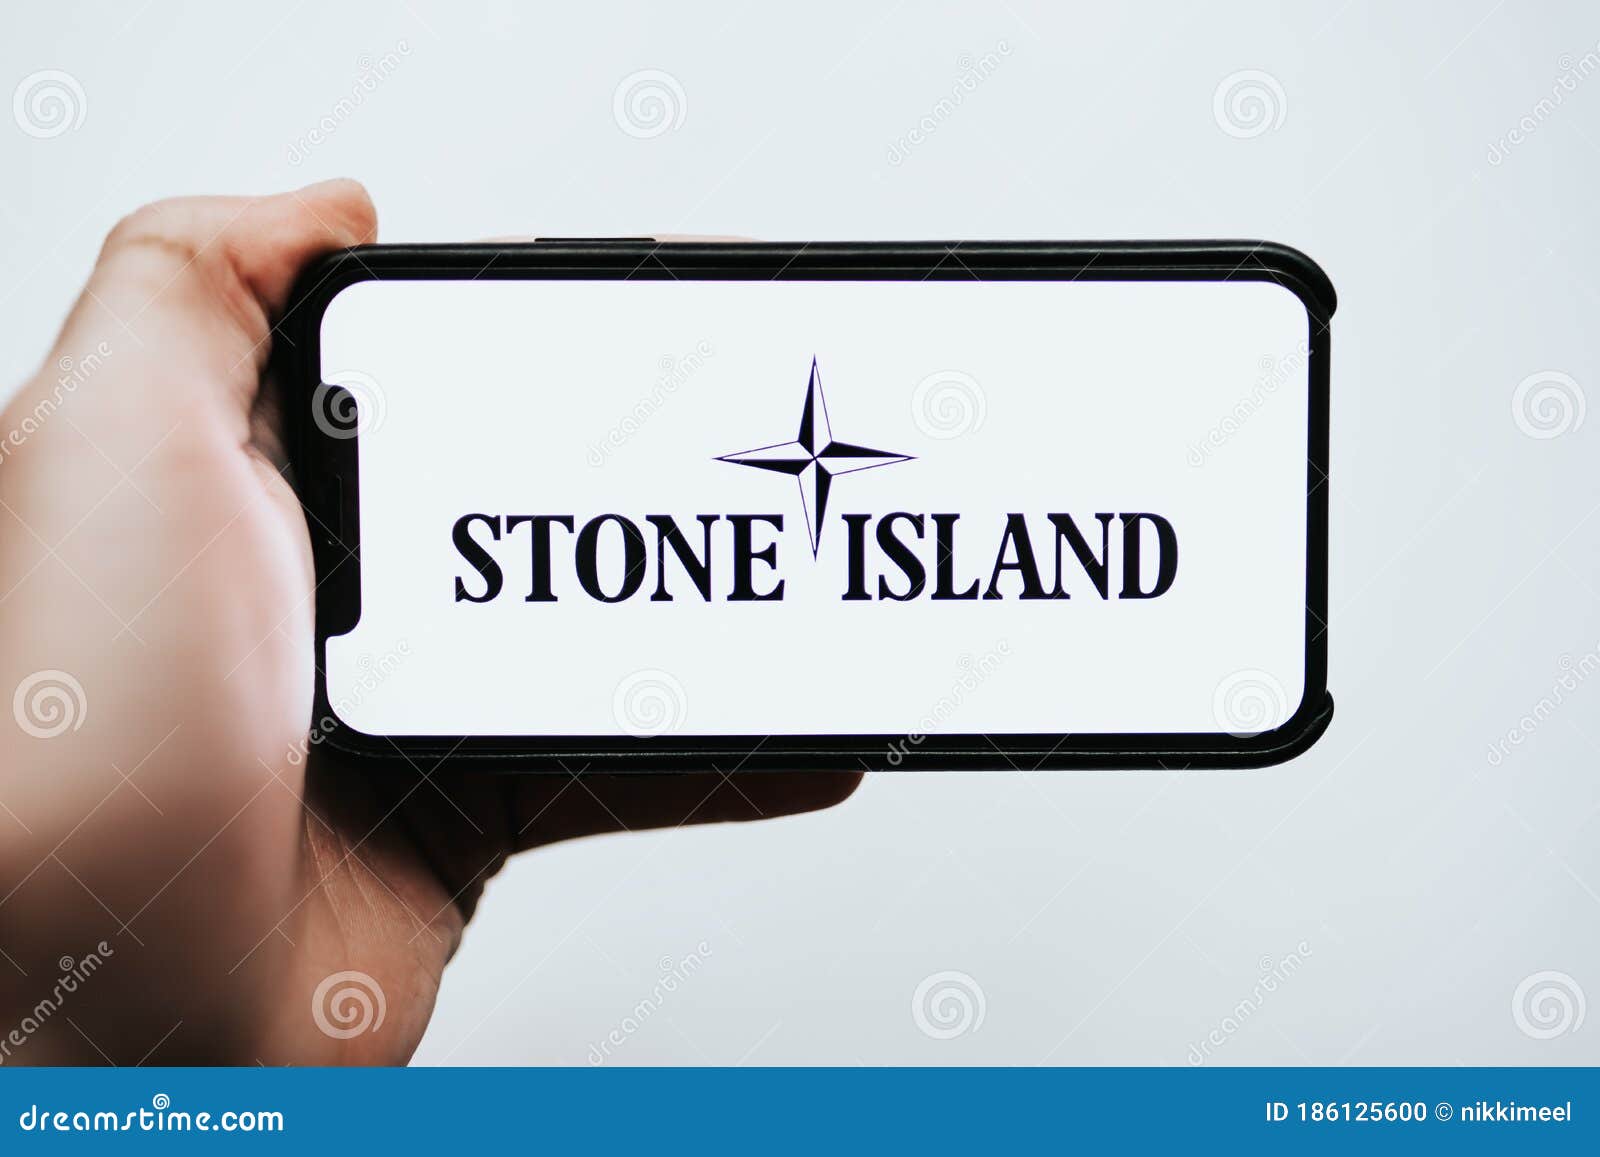 236 Stone Island Logo Stock Photos - Free & Royalty-Free Stock Photos from  Dreamstime